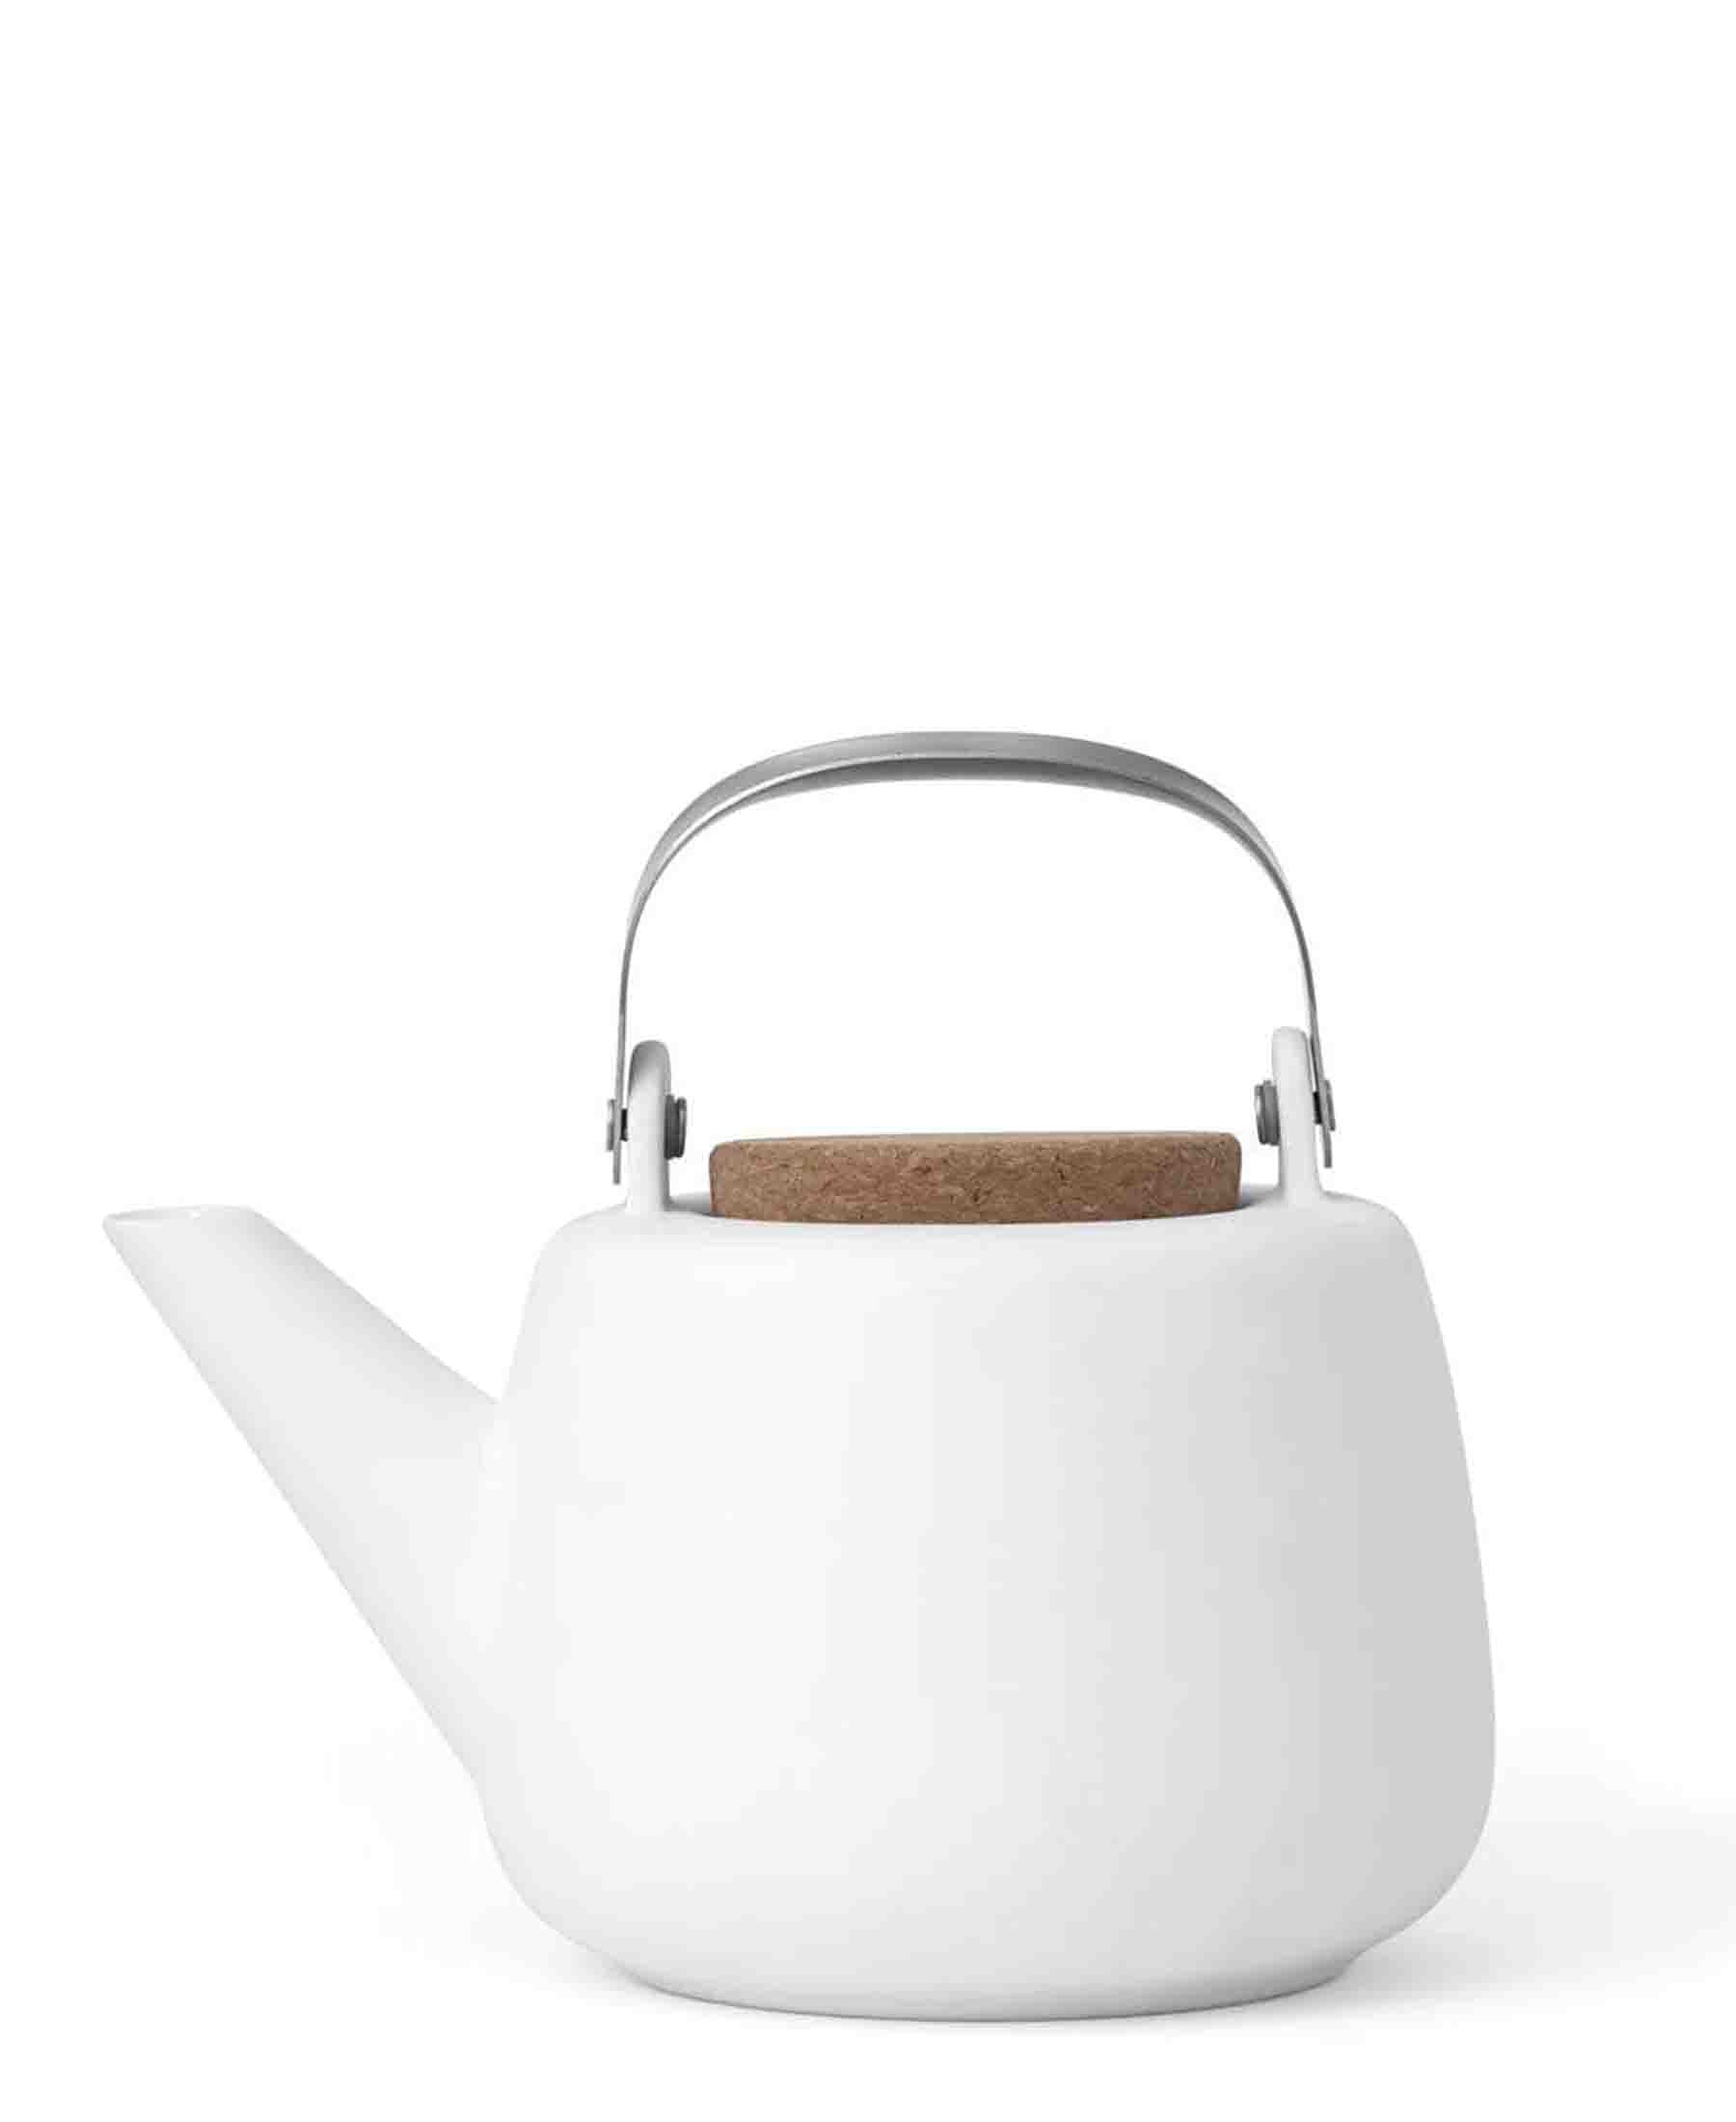 Viva Nicola 1.2l Infuser Teapot - White